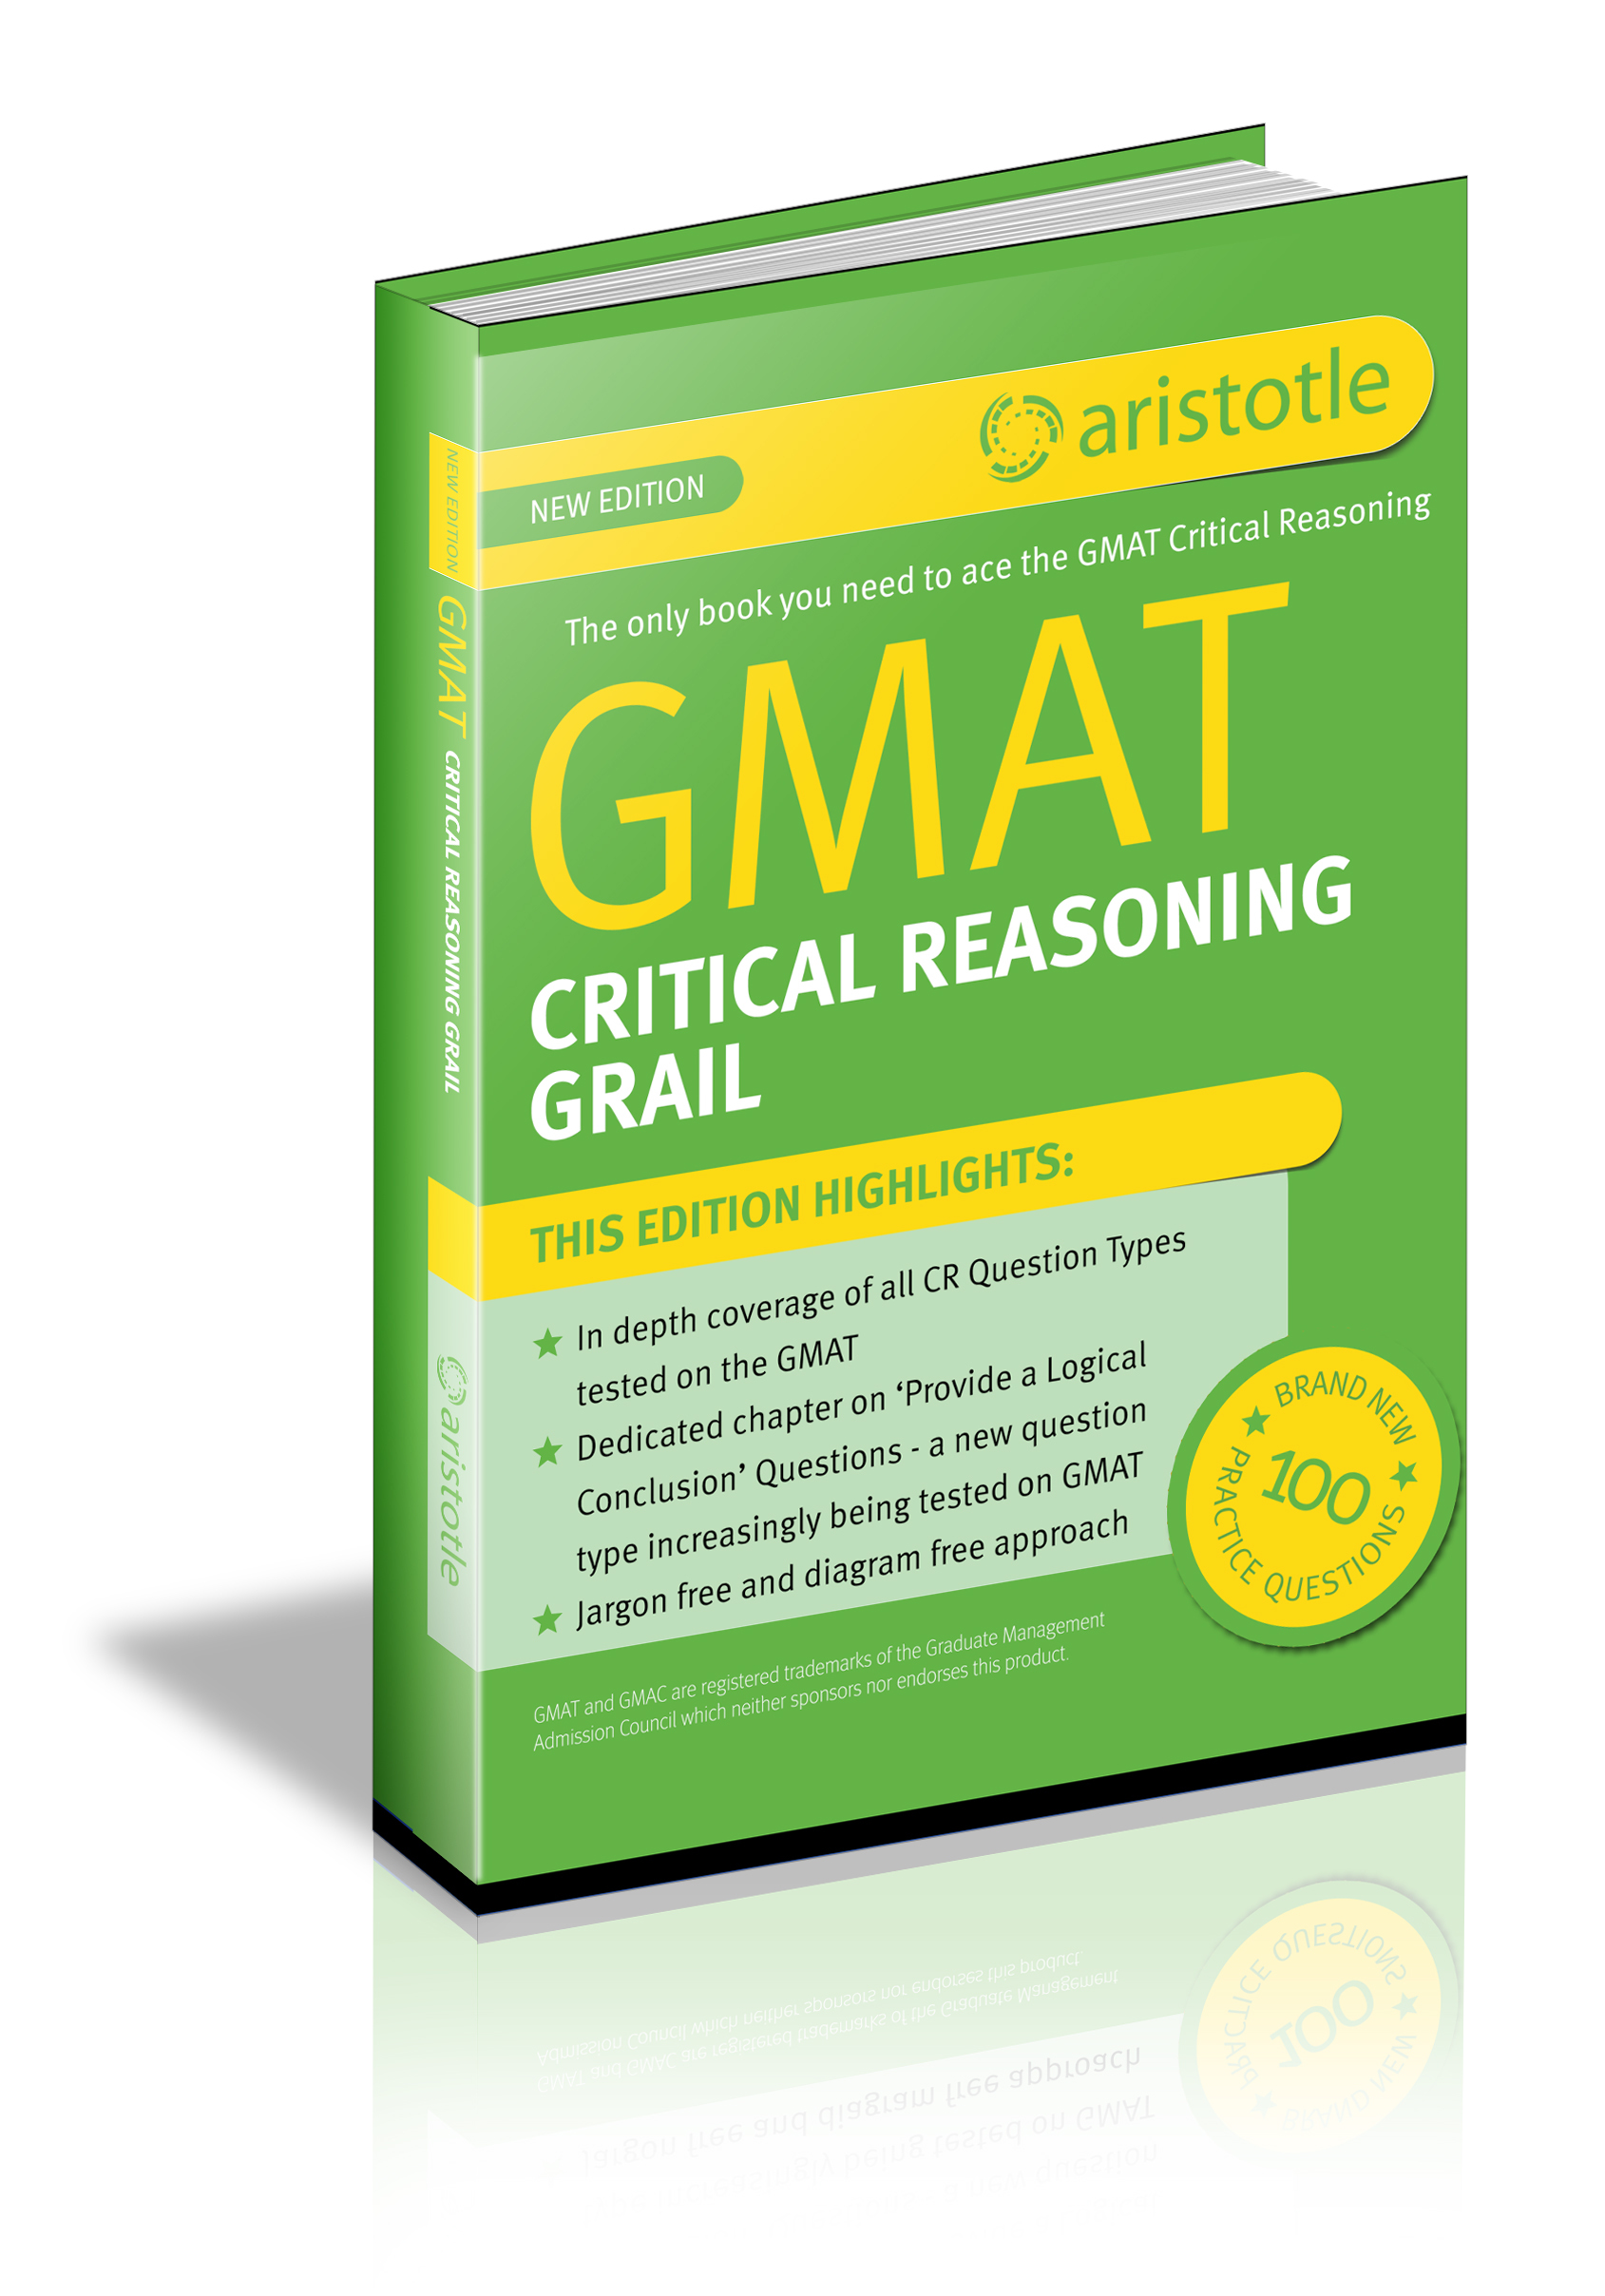 Gmat Critical Reasoning Grail Ebook Gmat Verbal